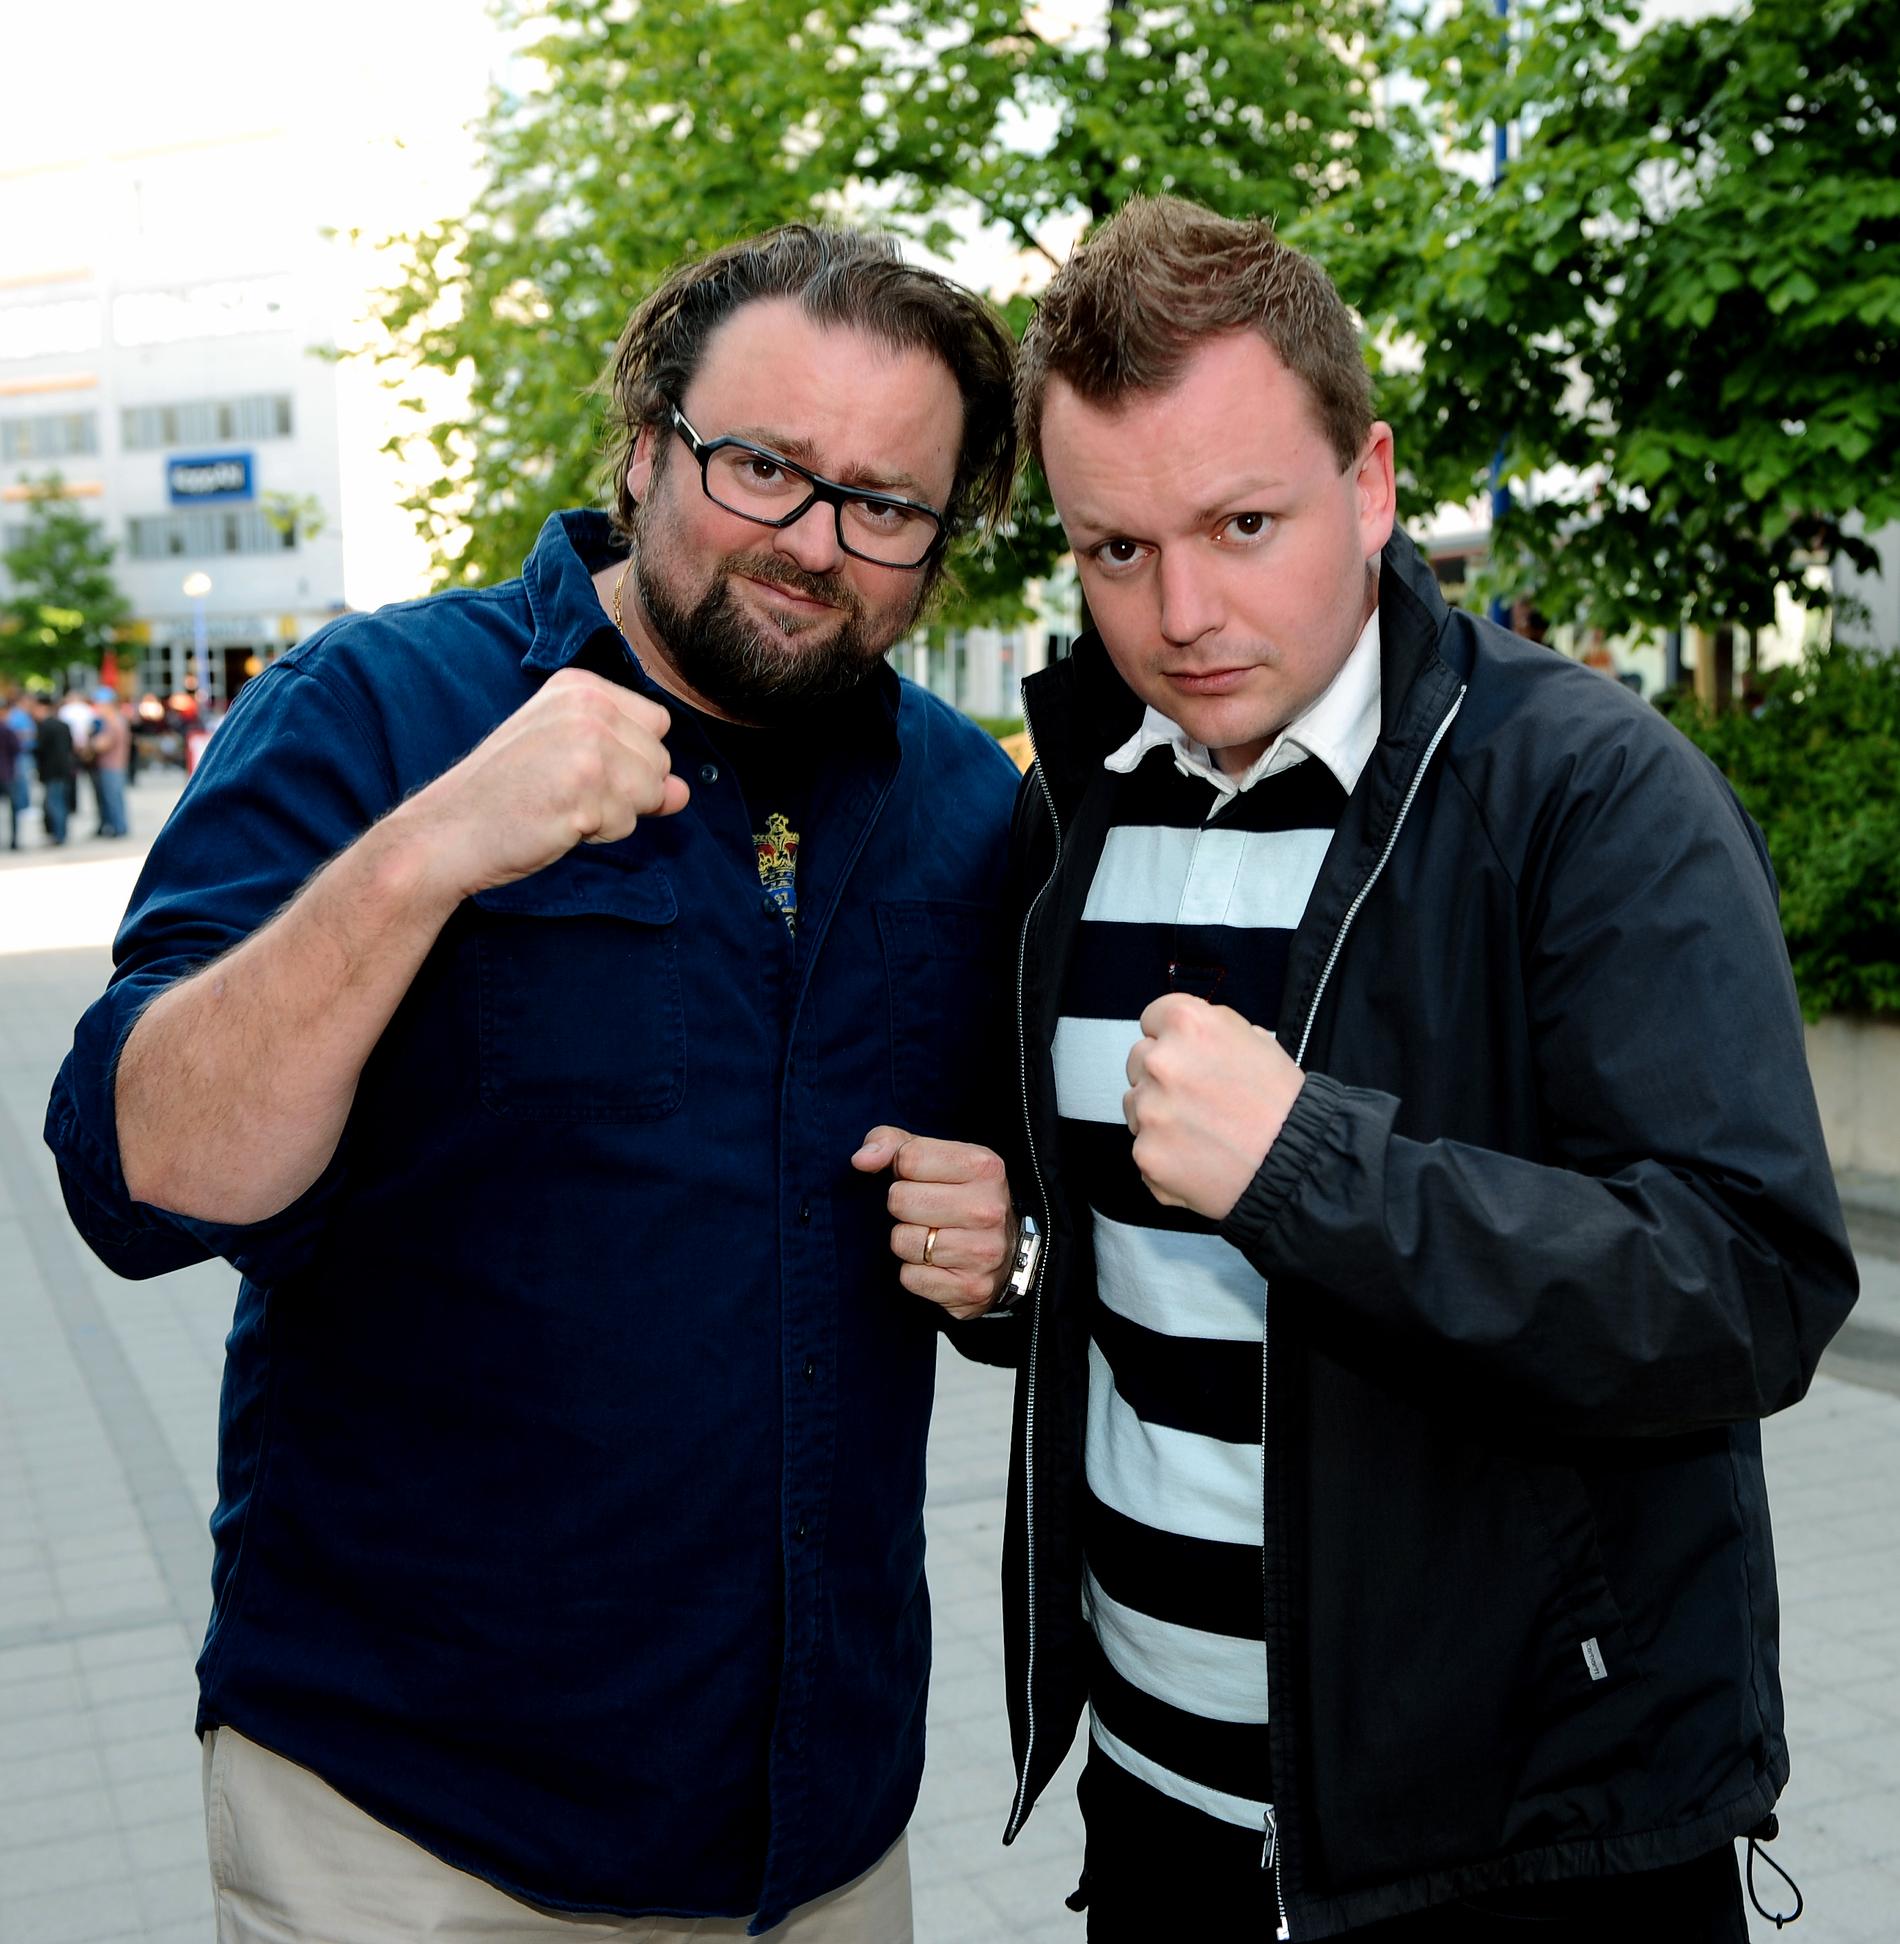 Tillsammans med brodern Pontus Alsing på K1-galan ”Rumble of the kings” 2008.